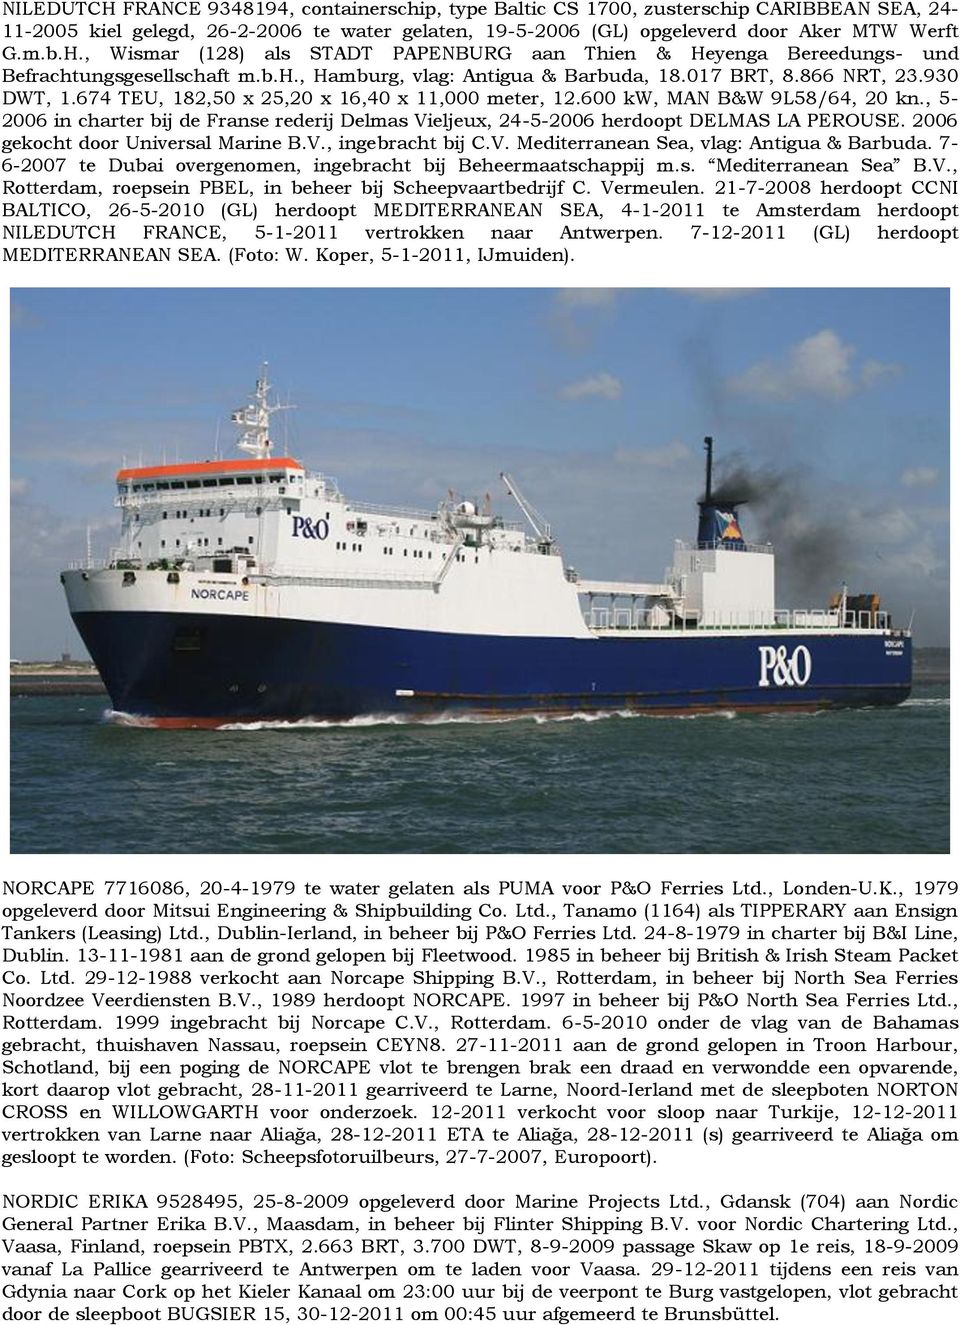 , 5-2006 in charter bij de Franse rederij Delmas Vieljeux, 24-5-2006 herdoopt DELMAS LA PEROUSE. 2006 gekocht door Universal Marine B.V., ingebracht bij C.V. Mediterranean Sea, vlag: Antigua & Barbuda.